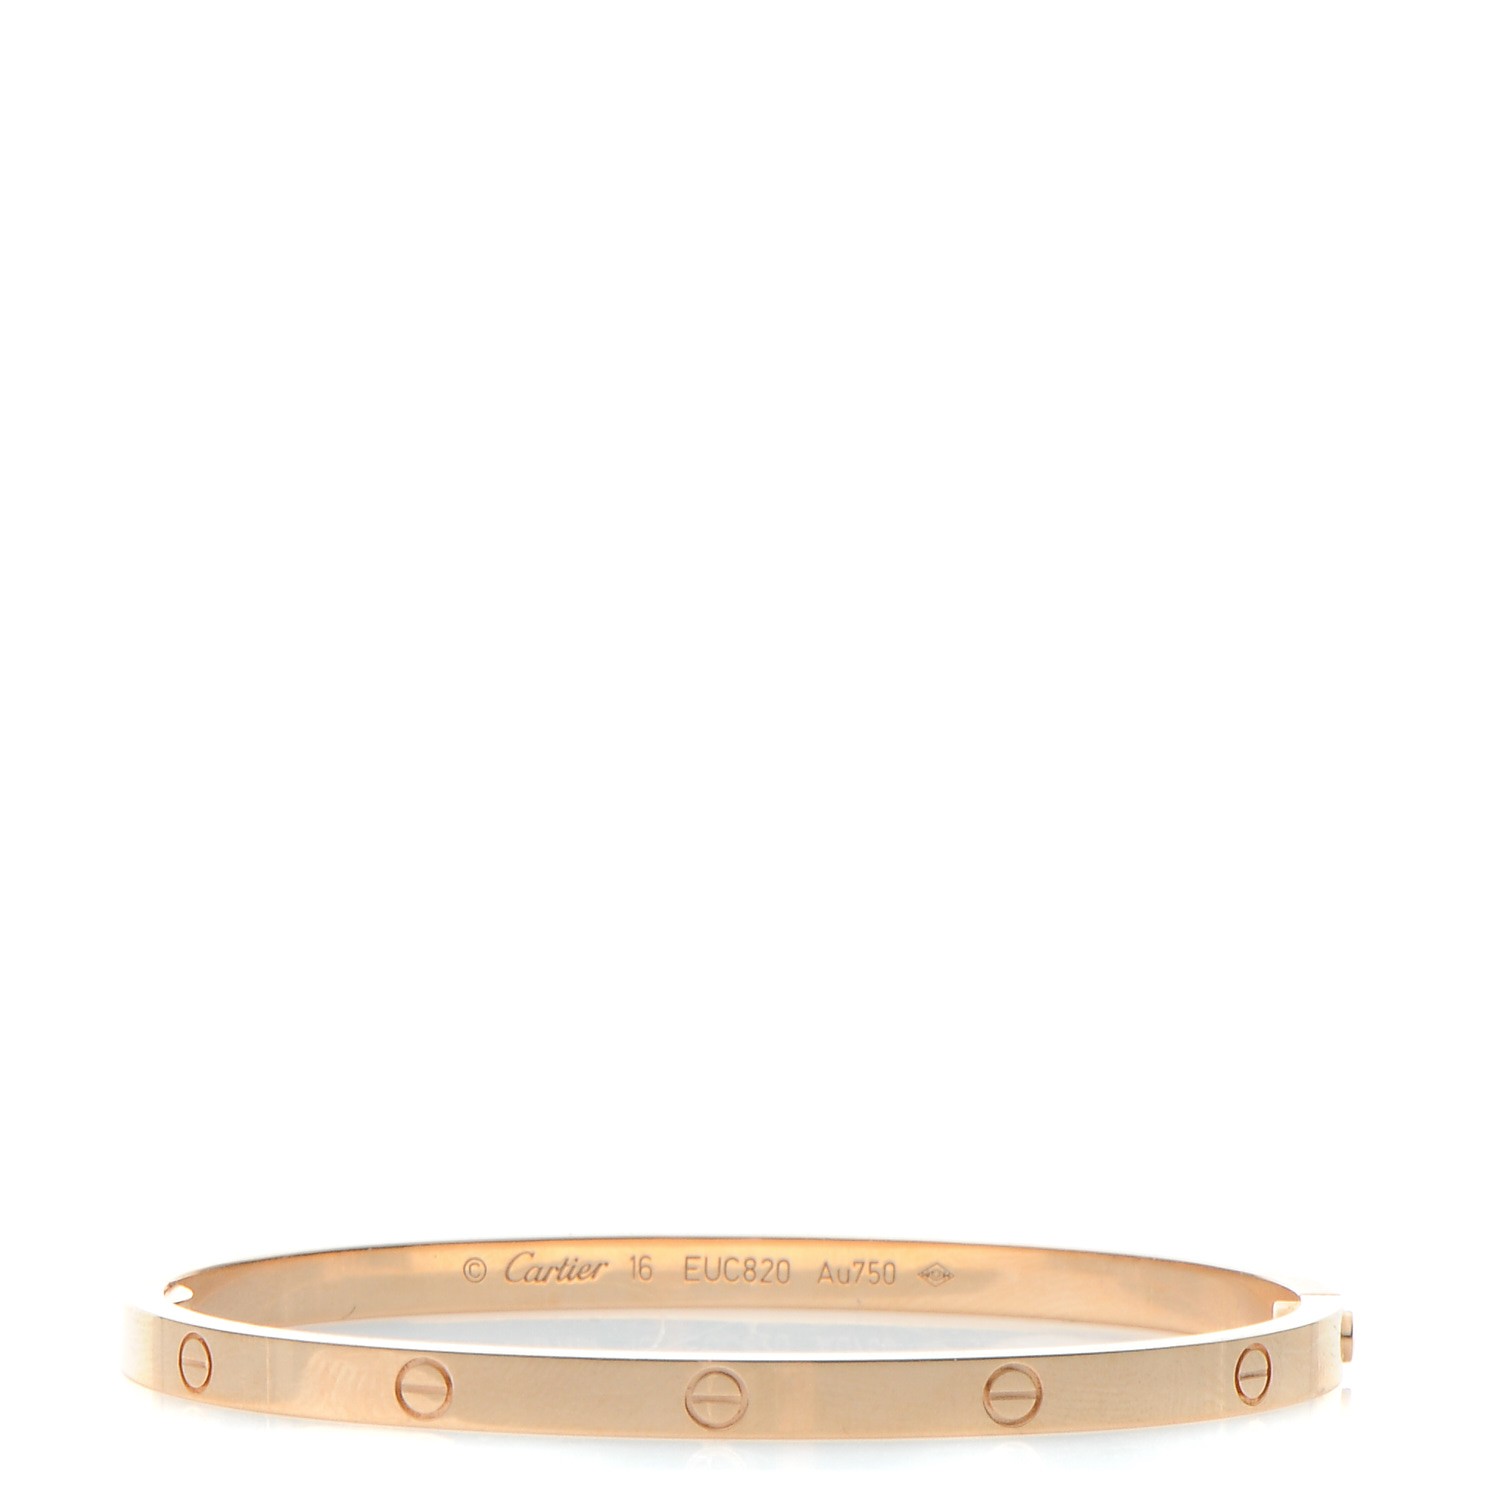 cartier love bracelet rose gold size 18